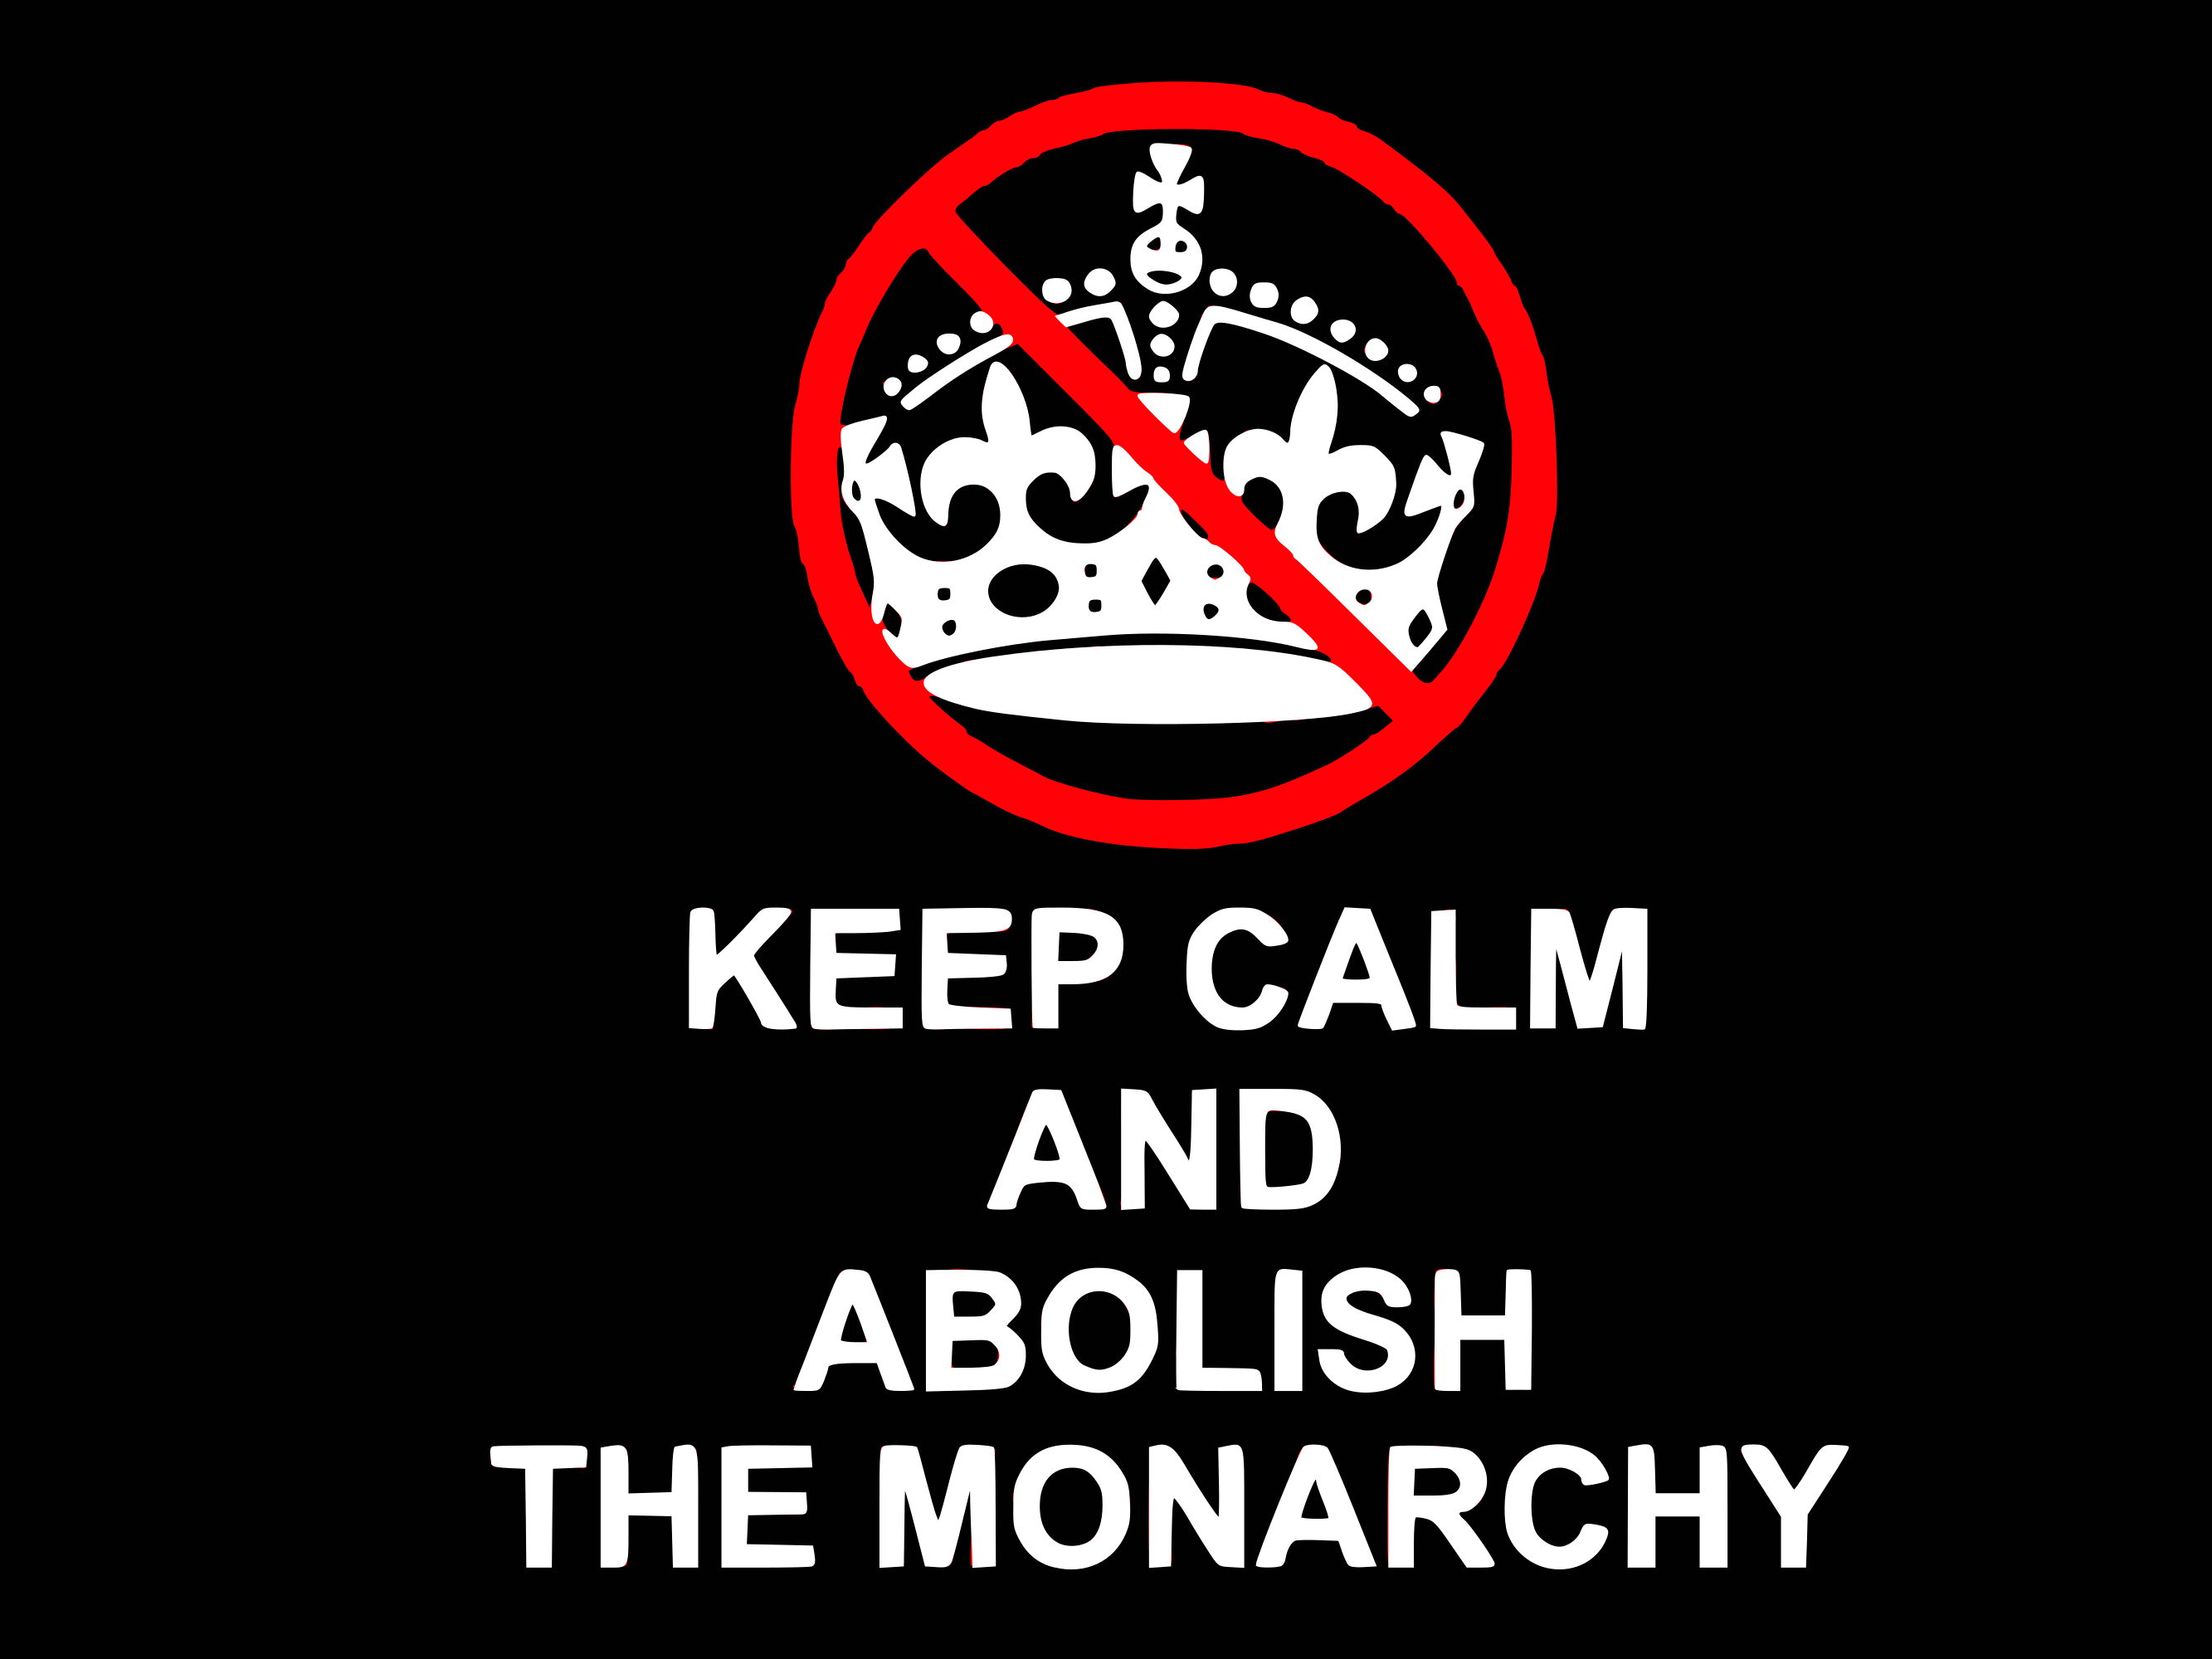 Keep calm and abolish the monarchy